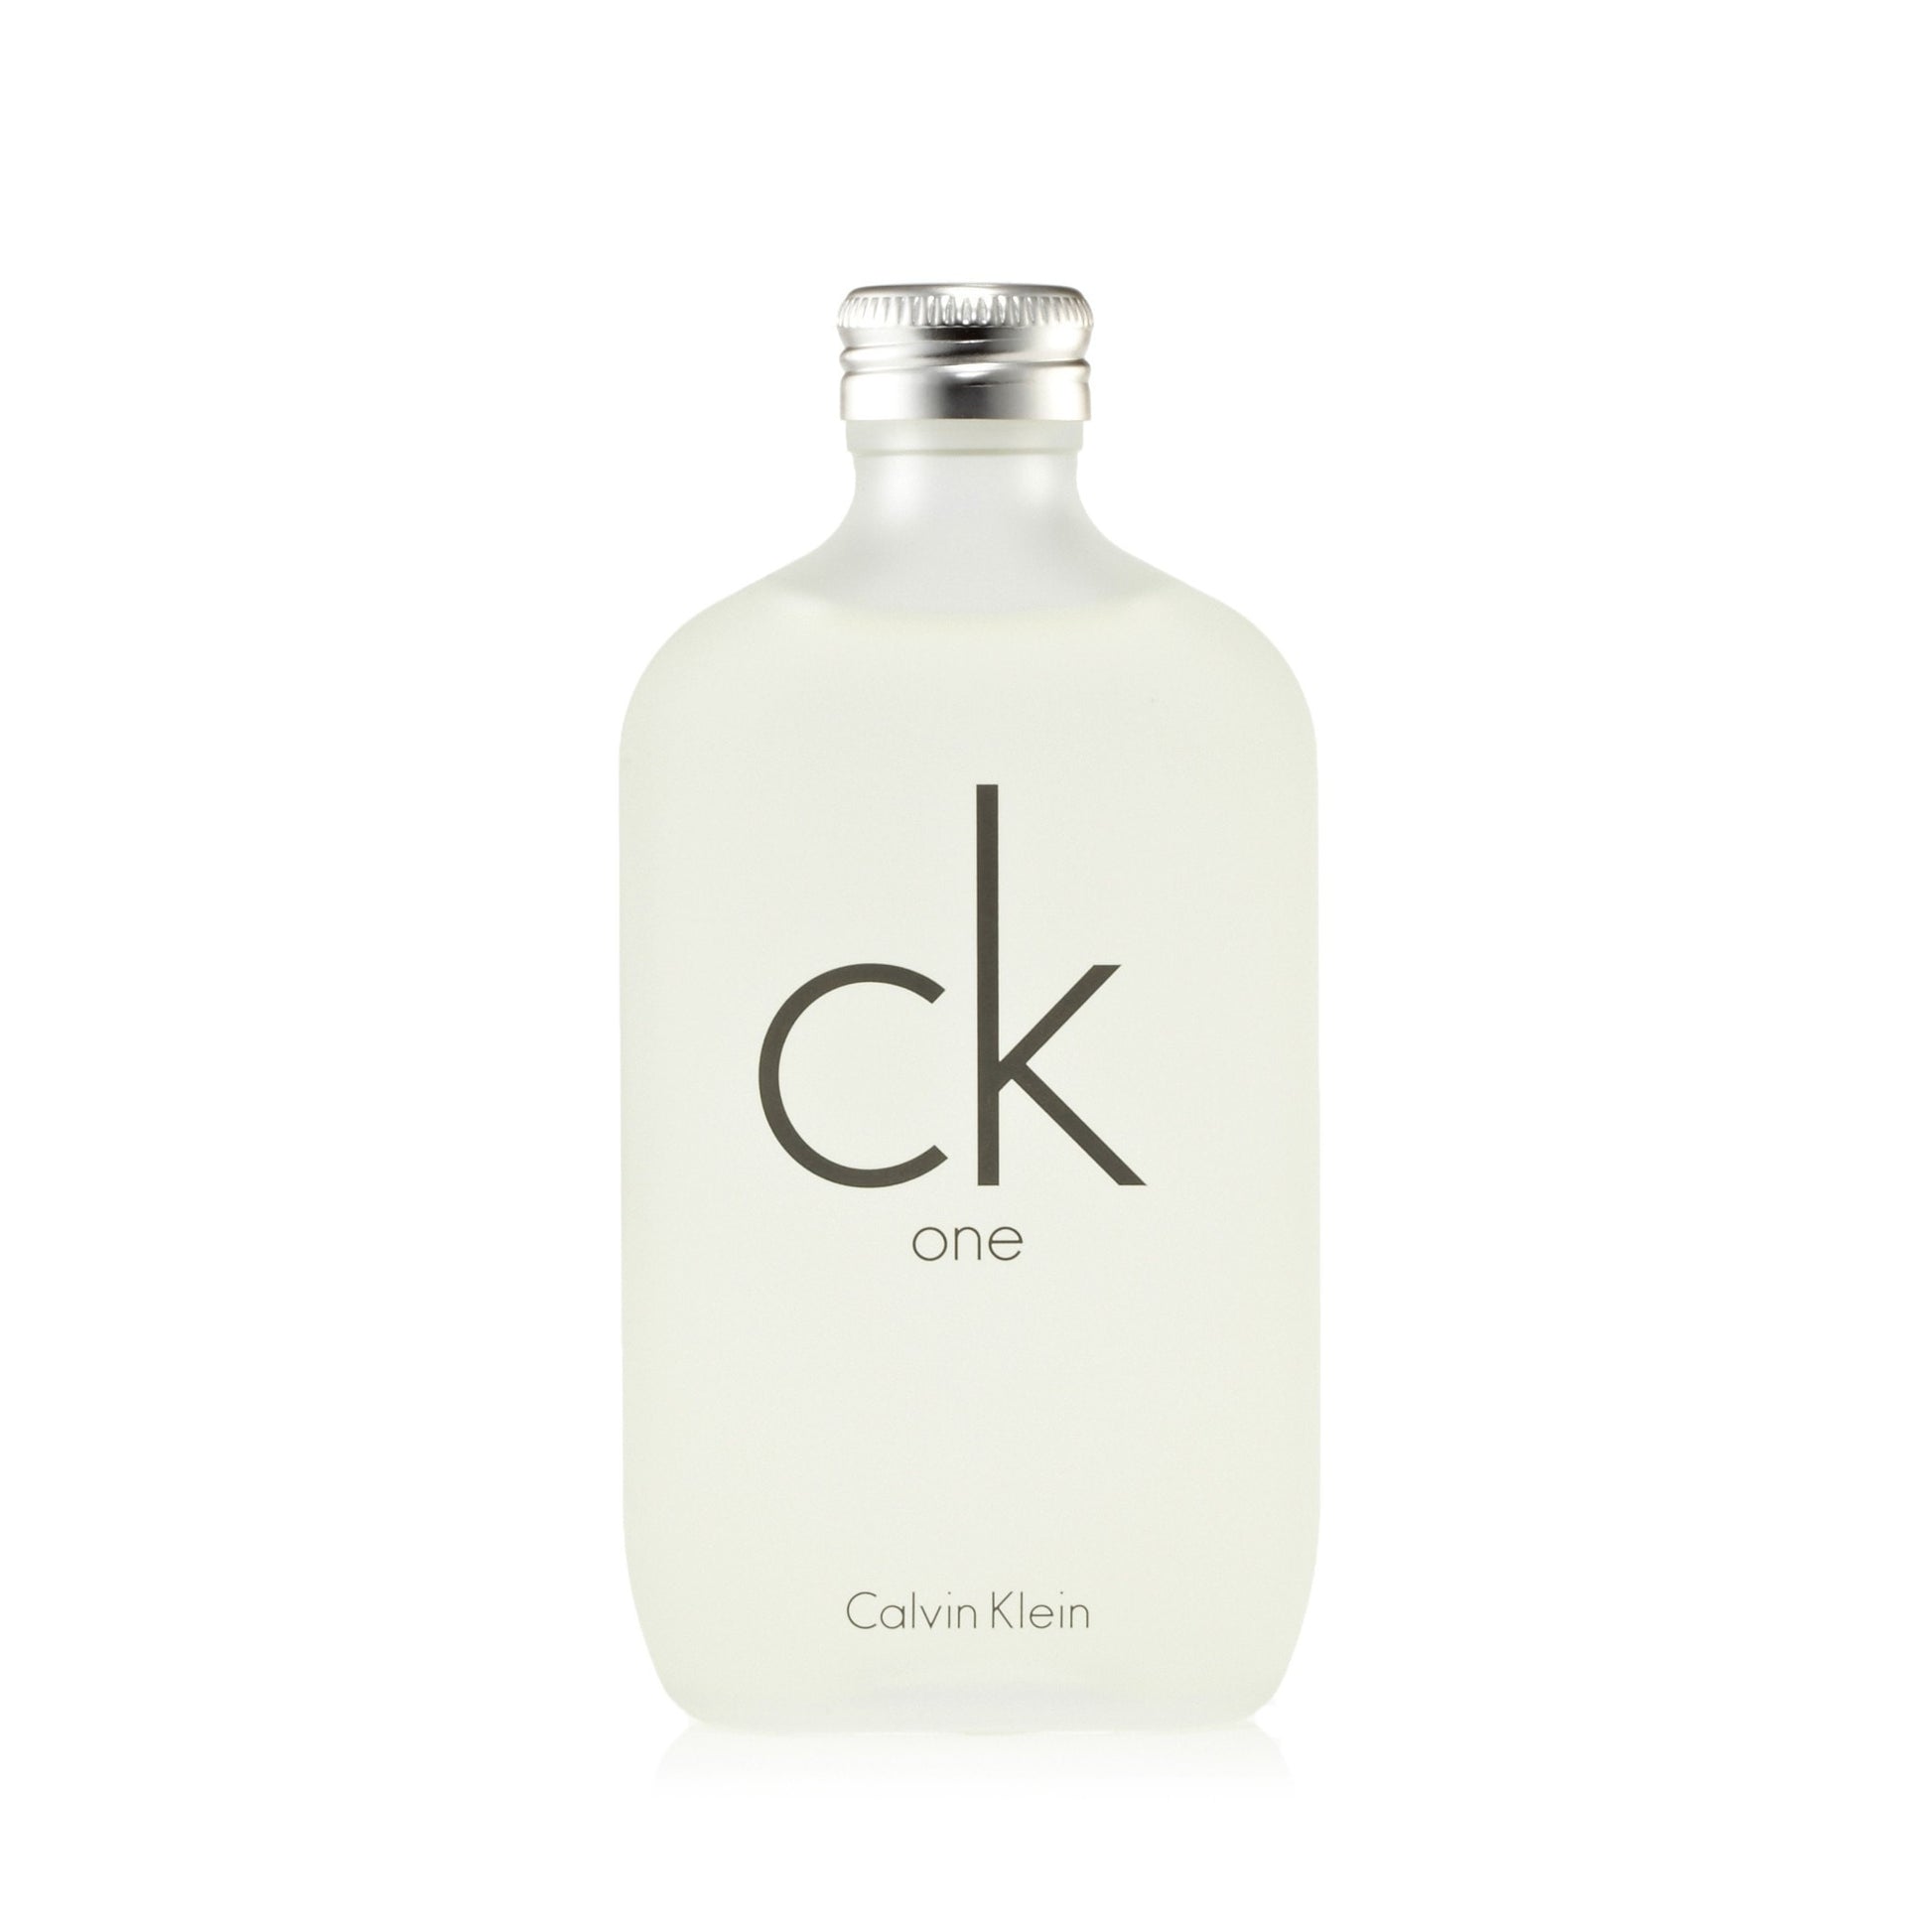 CK One Eau de Toilette Spray for Women and Men by Calvin Klein 6.7 oz. Click to open in modal